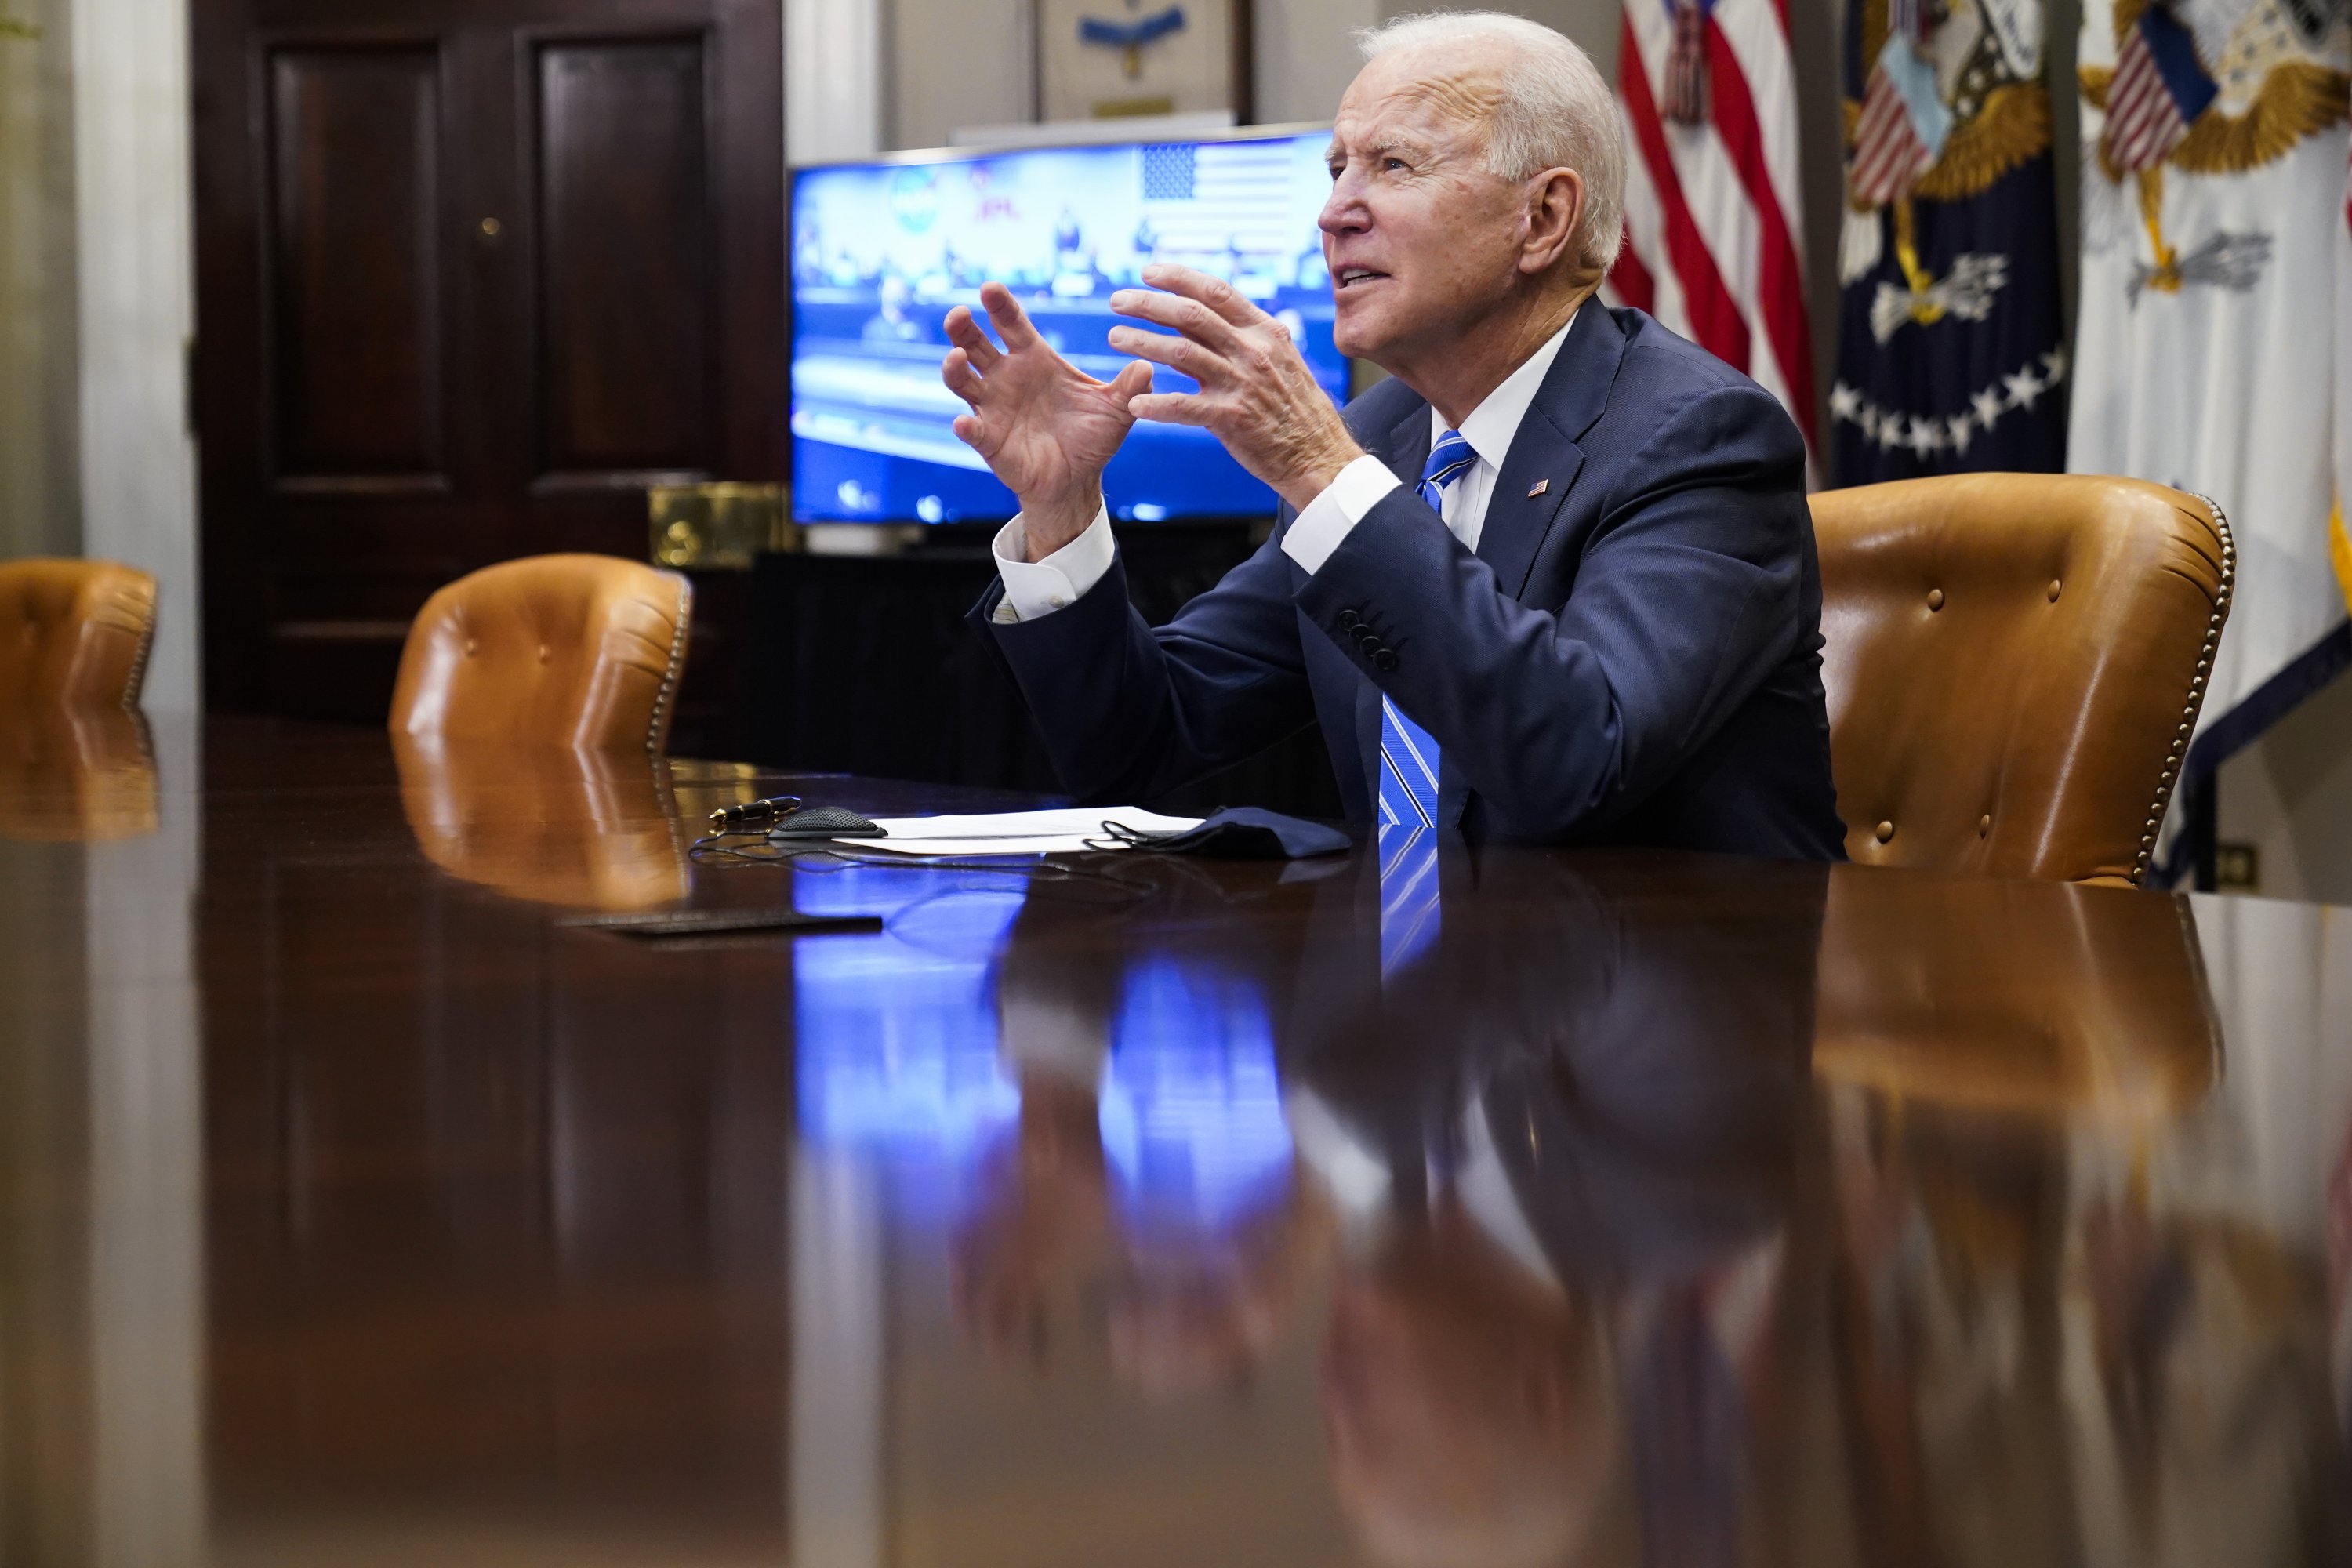 Americans strongly support Biden’s virus response